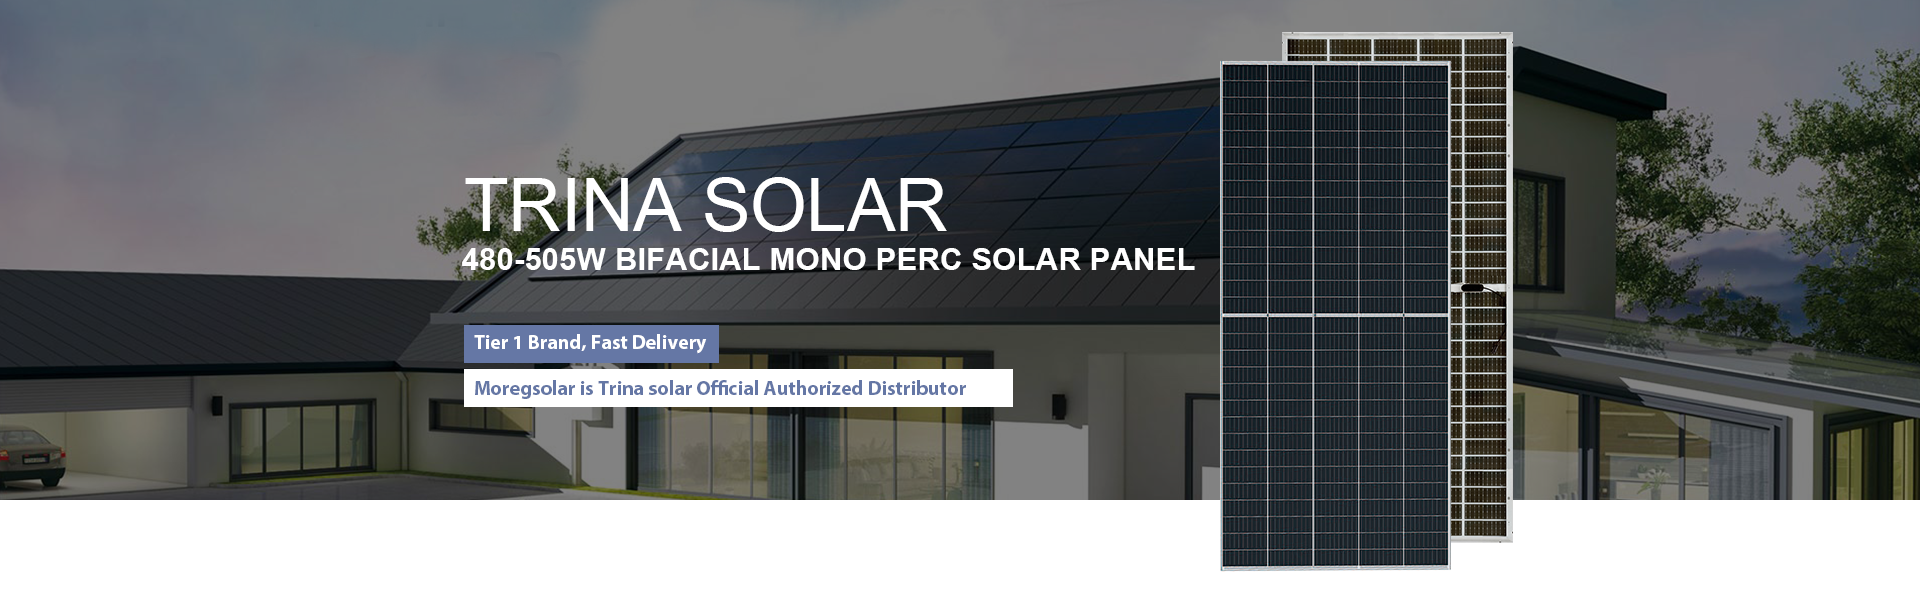 Trina solar vertex solar panel 500w 210mm bifacial solar cells panels